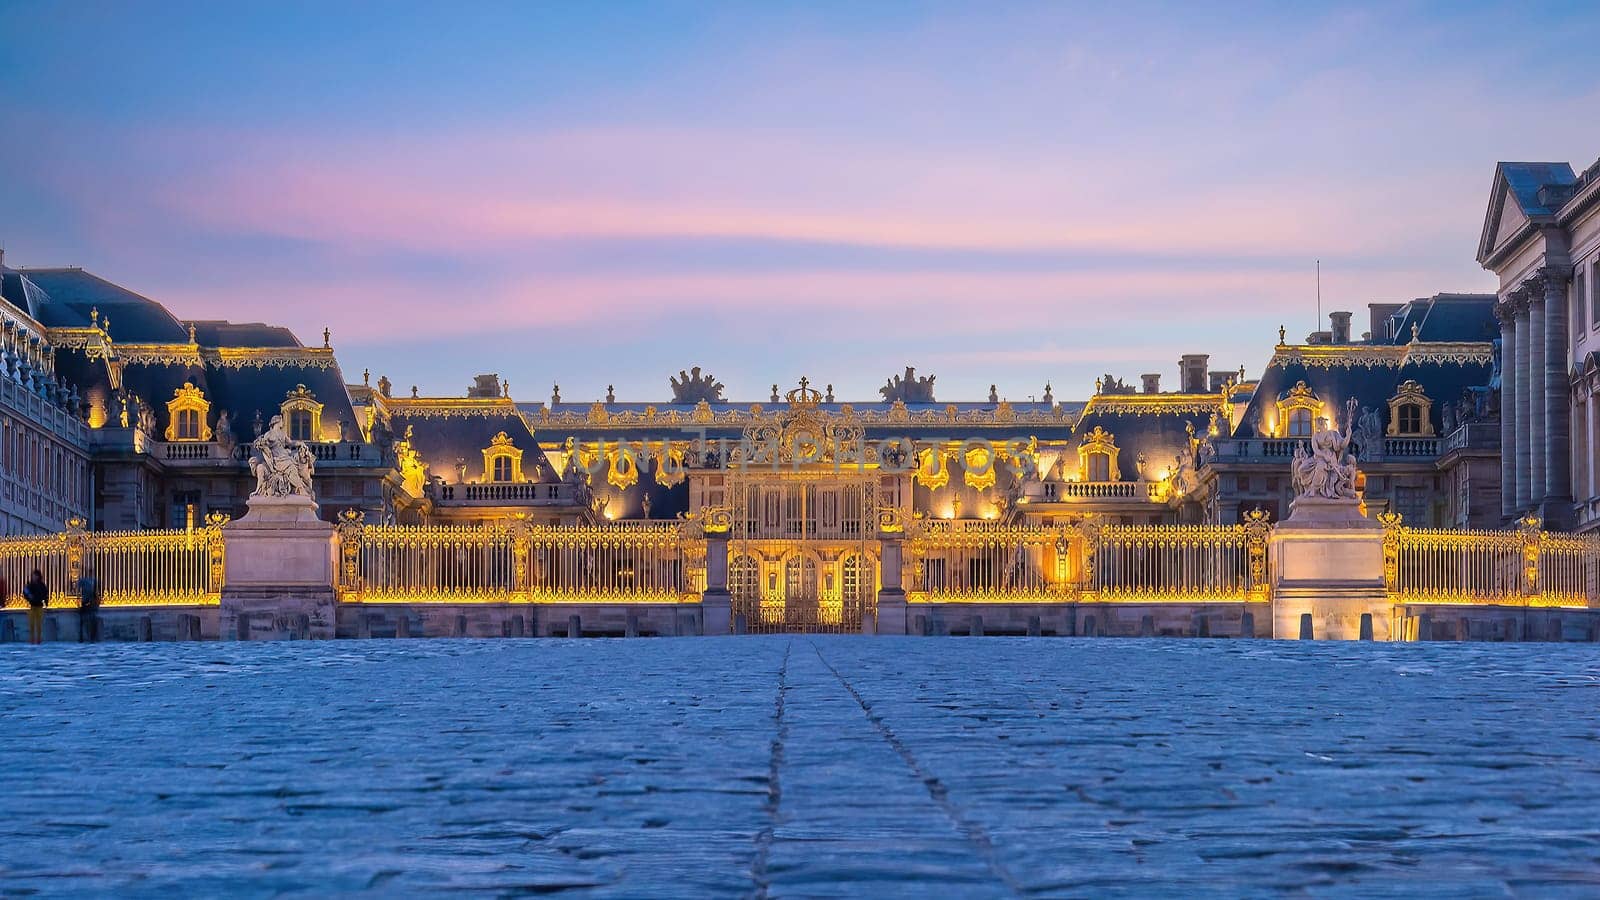 Entrance of Chateau de Versailles, near Paris in France at sunset